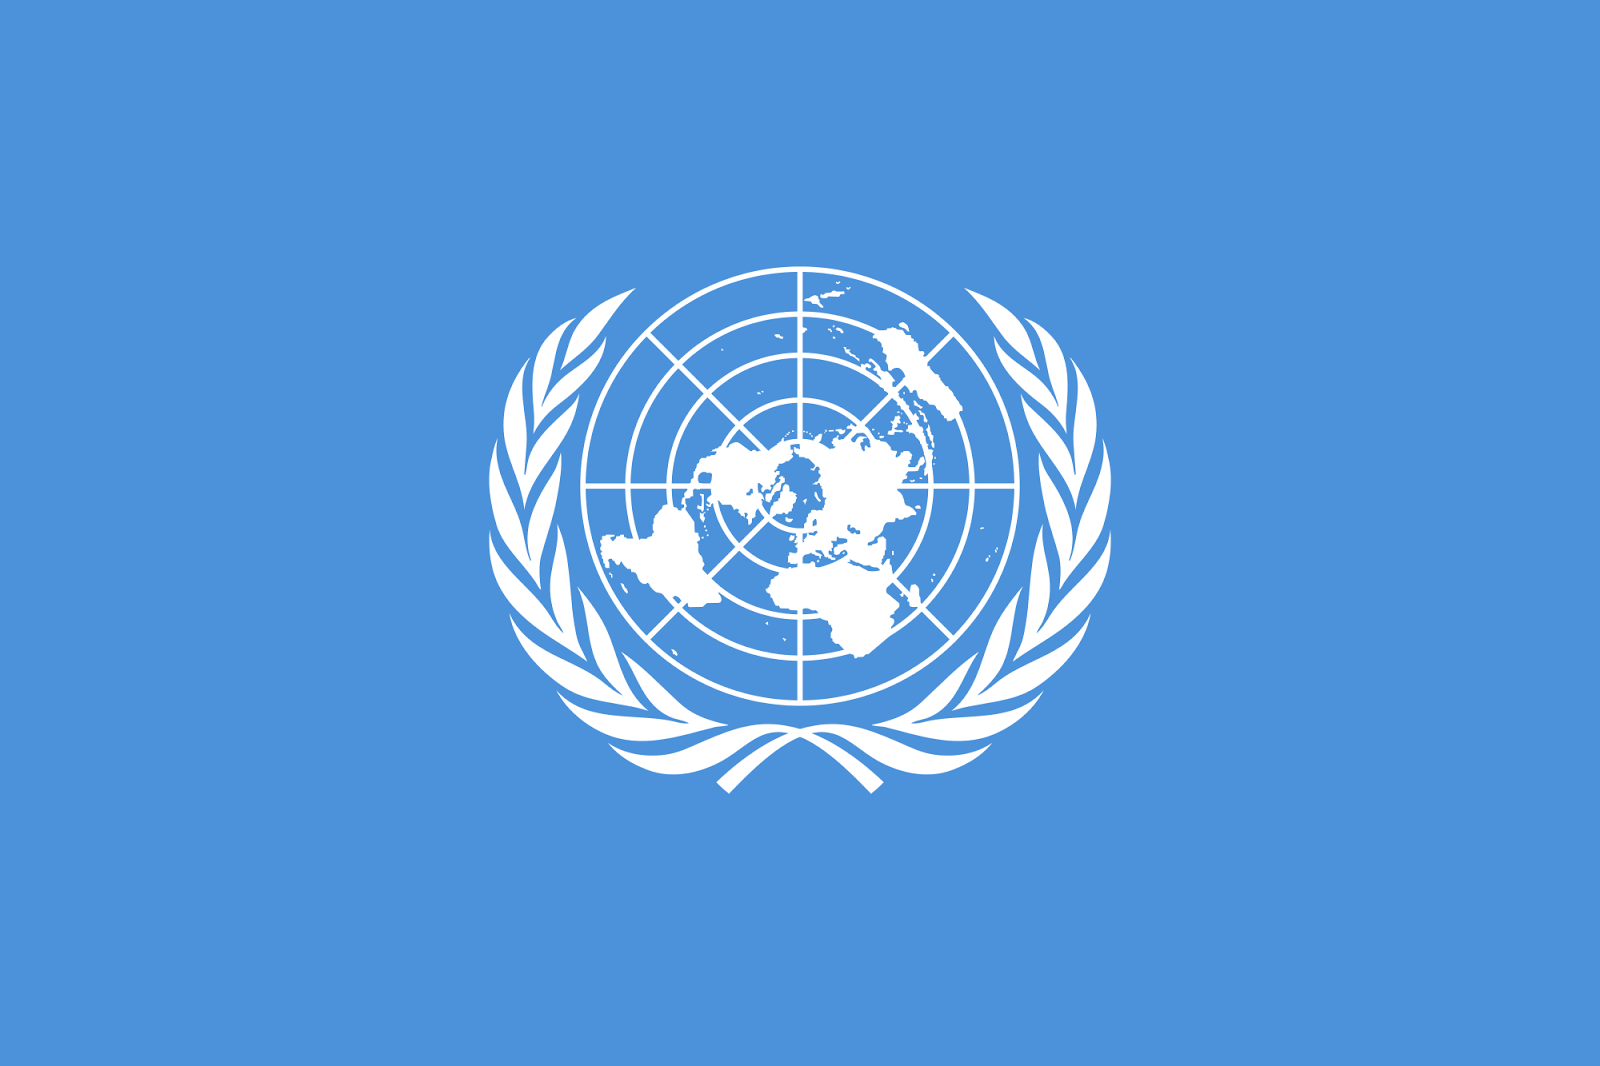 United Nations Flat Earth Logo - Philip Stallings: The Biblical Flat Earth: Hidden In Plain Sight